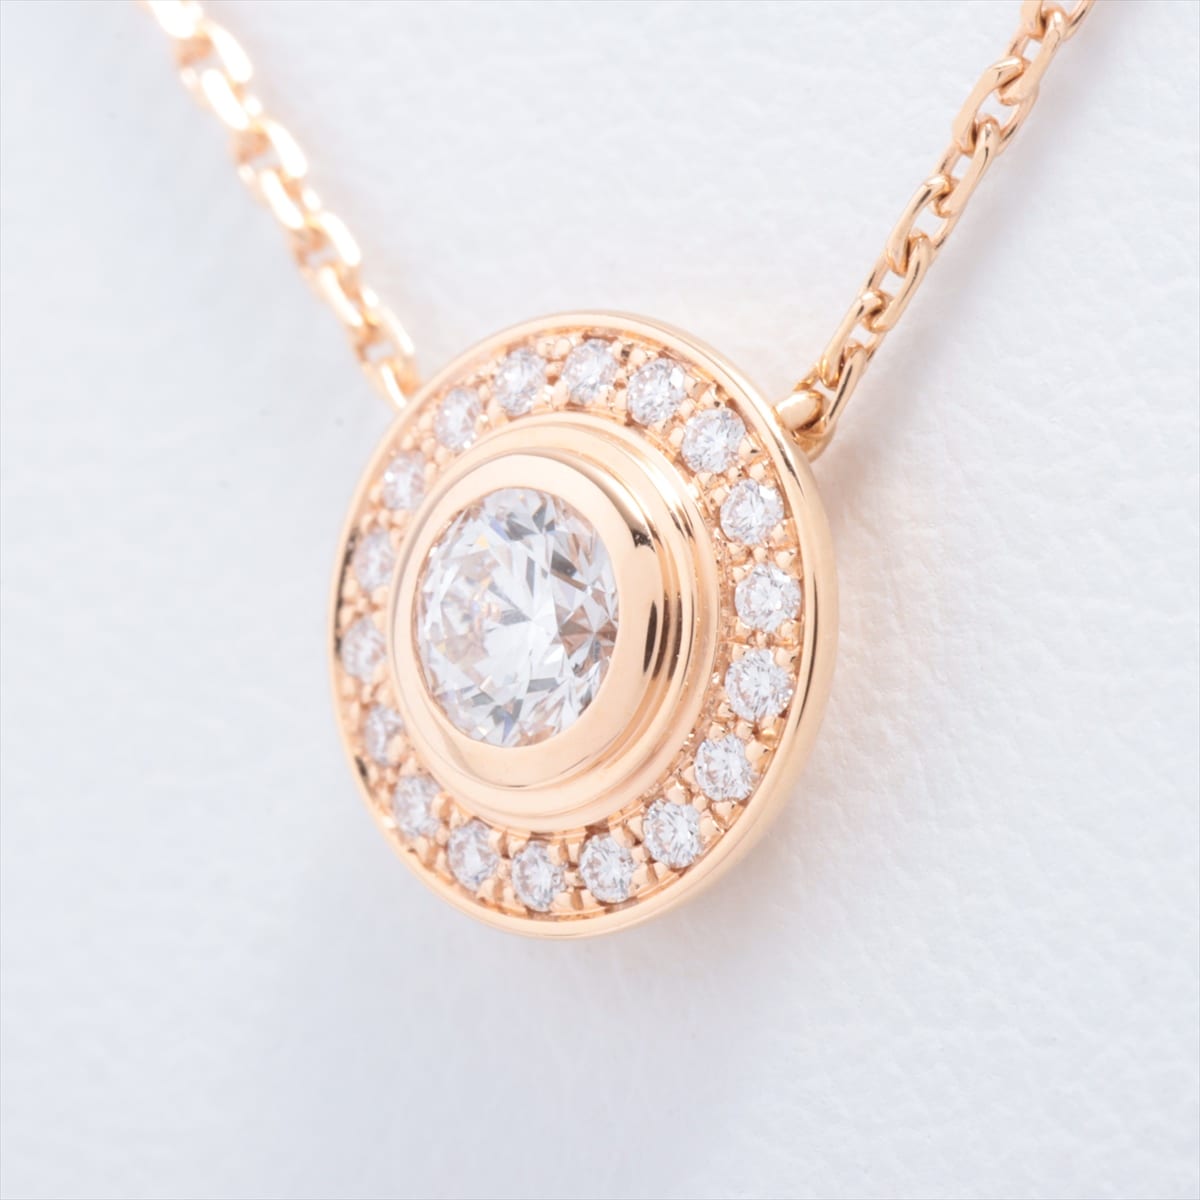 Cartier Damenuhr diamond Necklace 750PG 3.5g